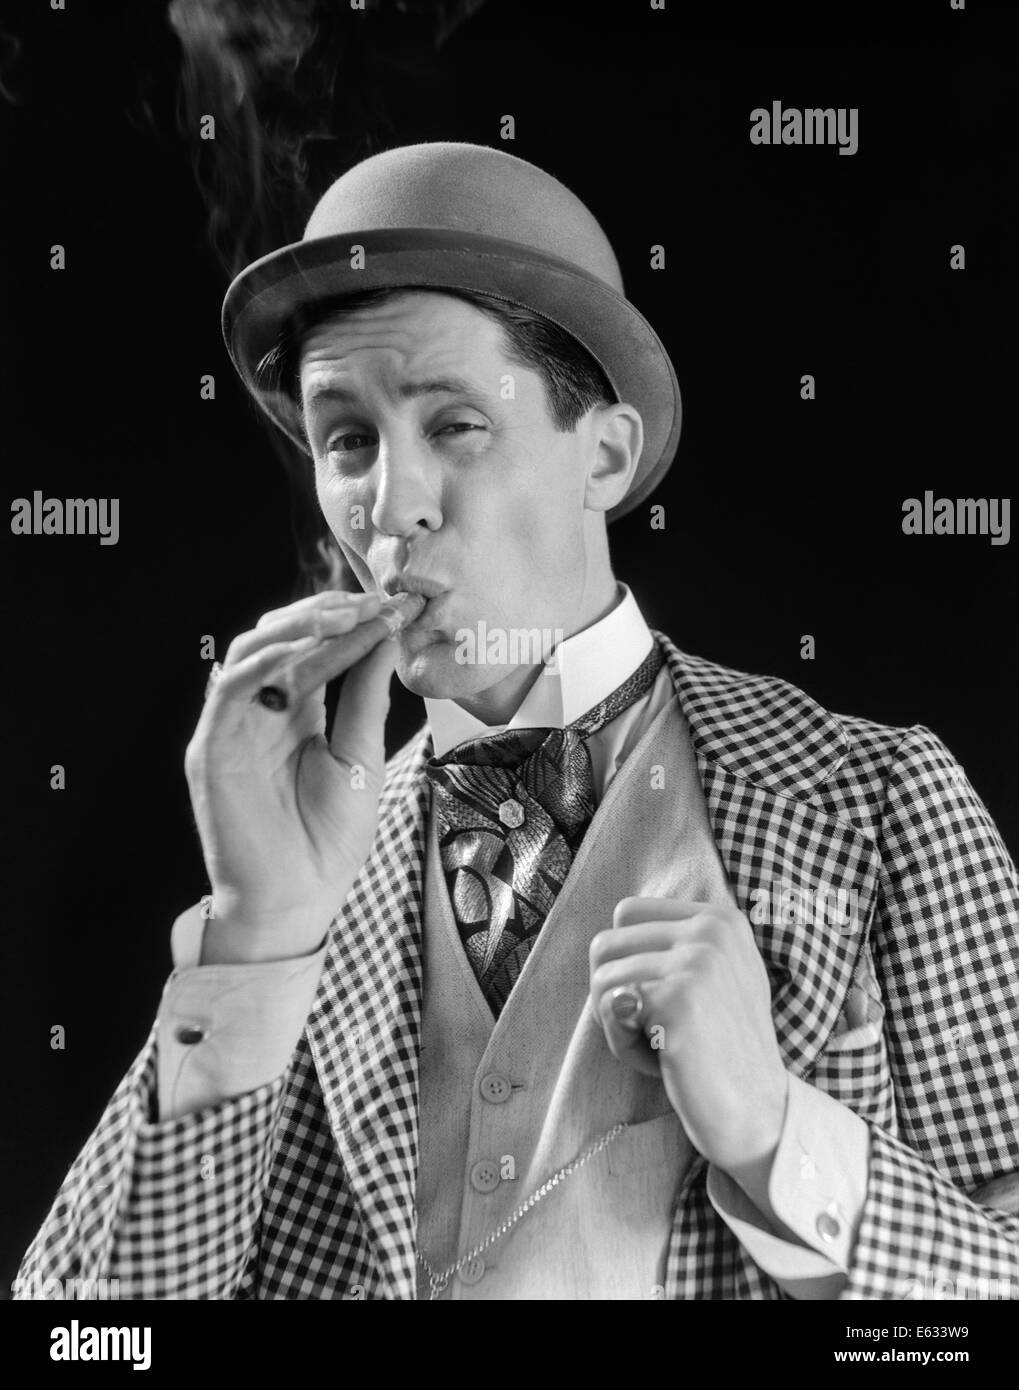 1910s 1920s CHARACTER MAN INHALING CIGAR CON MAN BOWLER HAT FANCY SUIT CRAVAT Stock Photo